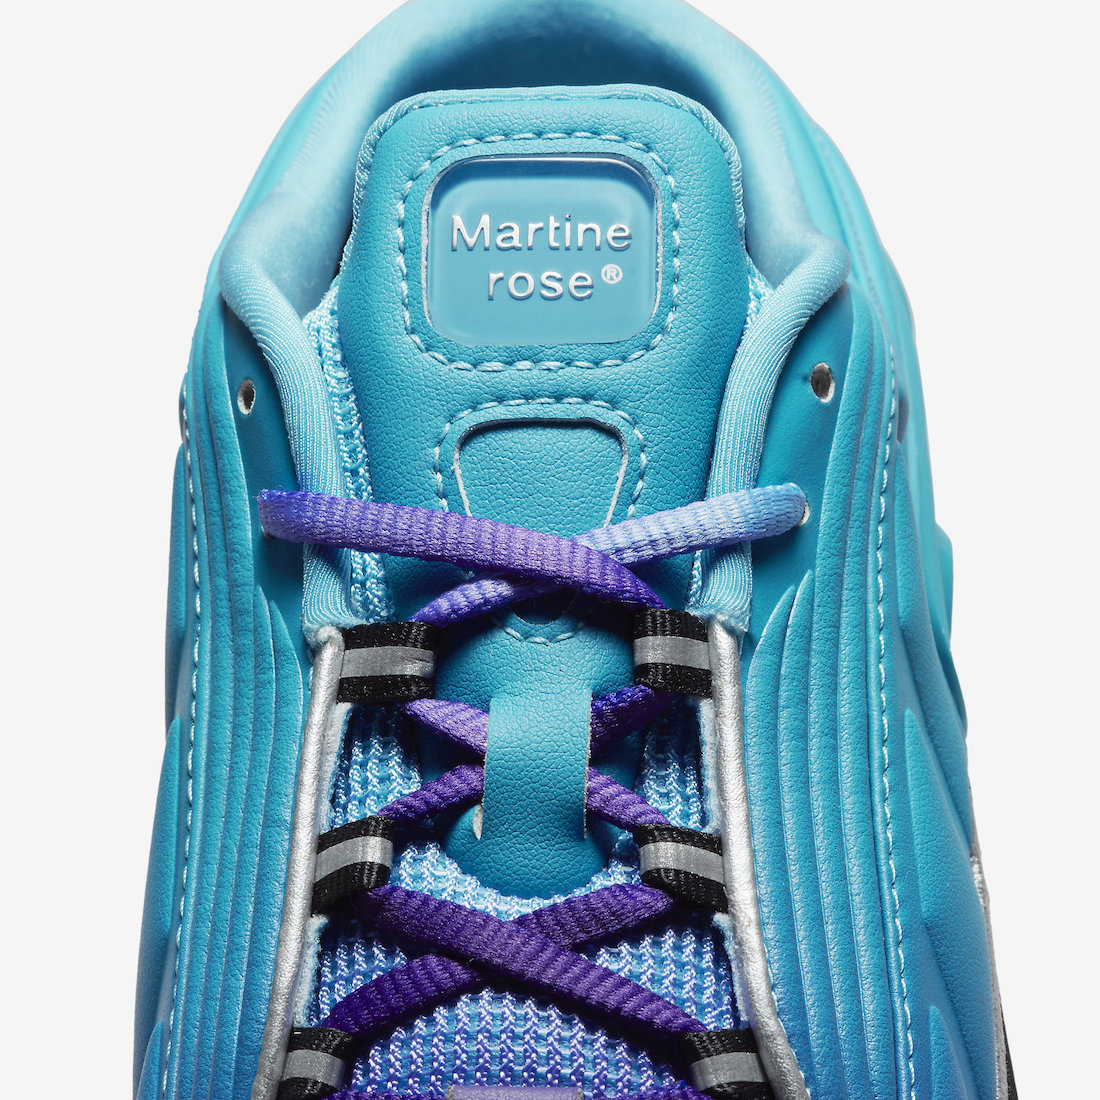 Martine Rose Nike Shox Mule MR 4 Scuba Blue Tongue DQ2401-400